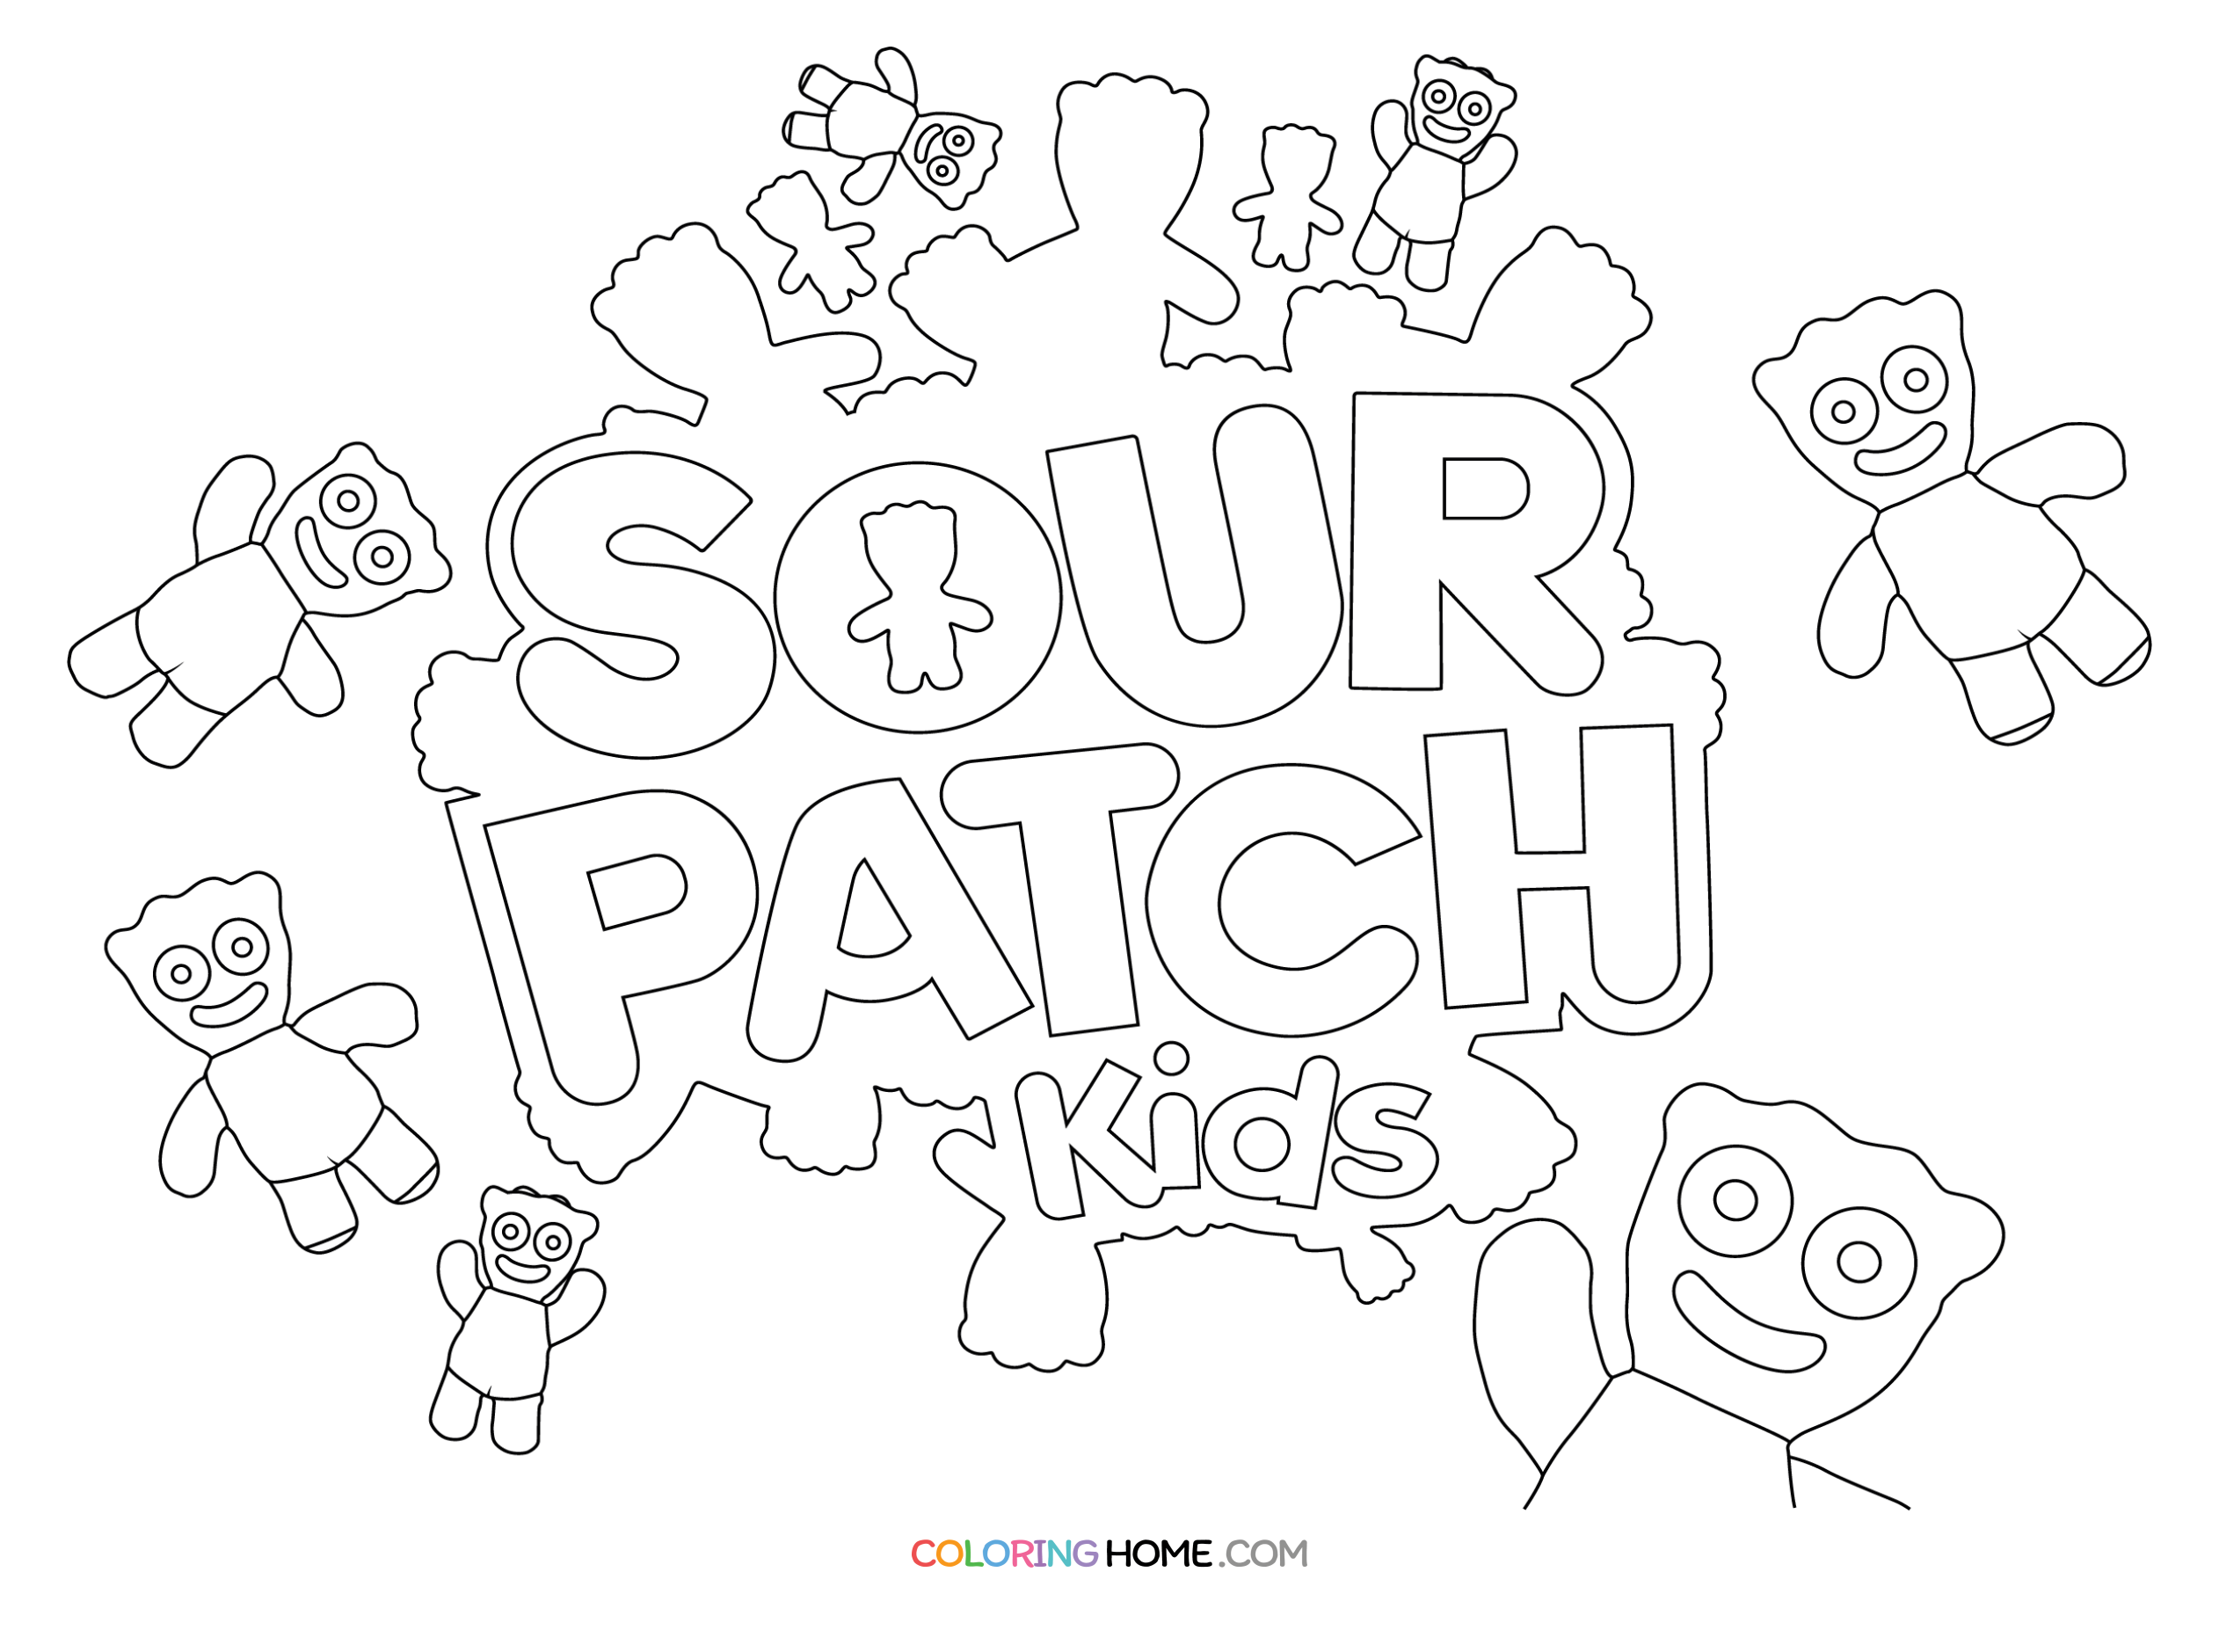 Sour Patch Kids coloring page